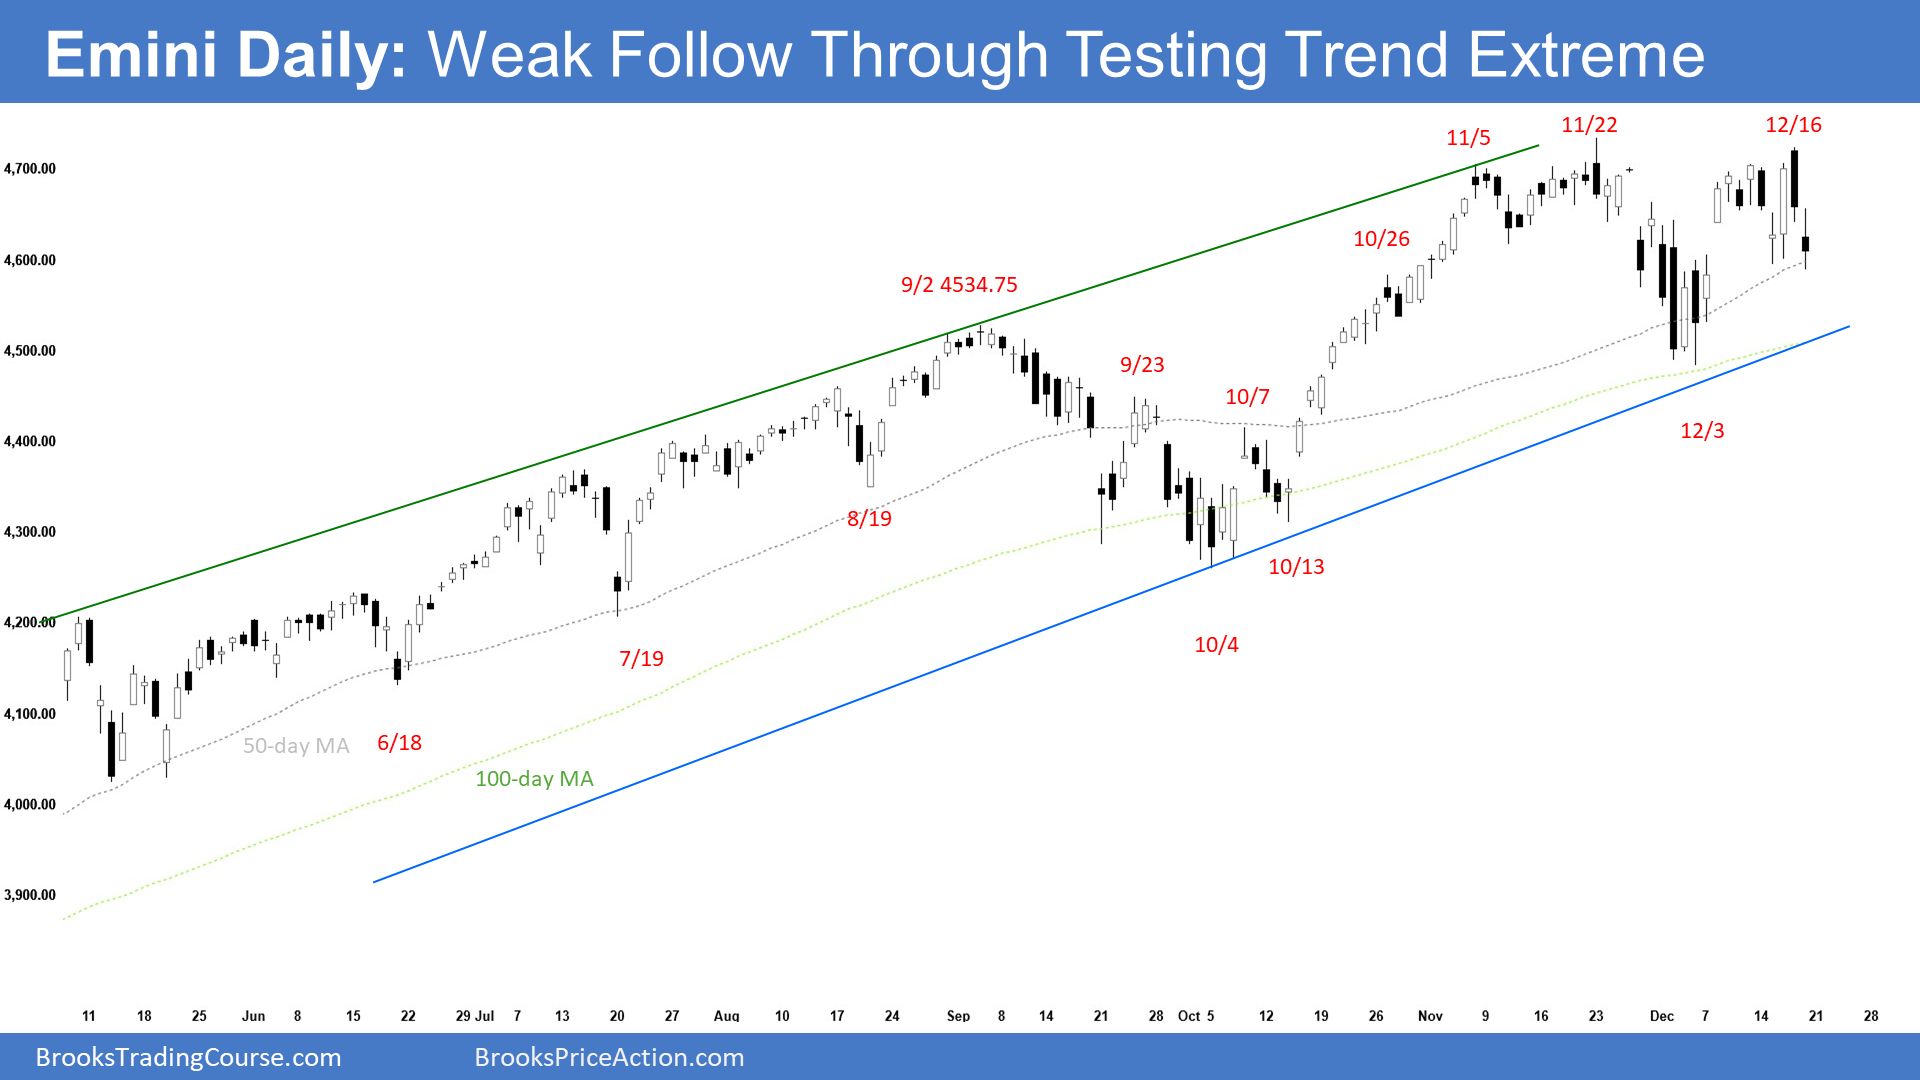 SP500 Emini daily chart weak follow through testing trend extreme